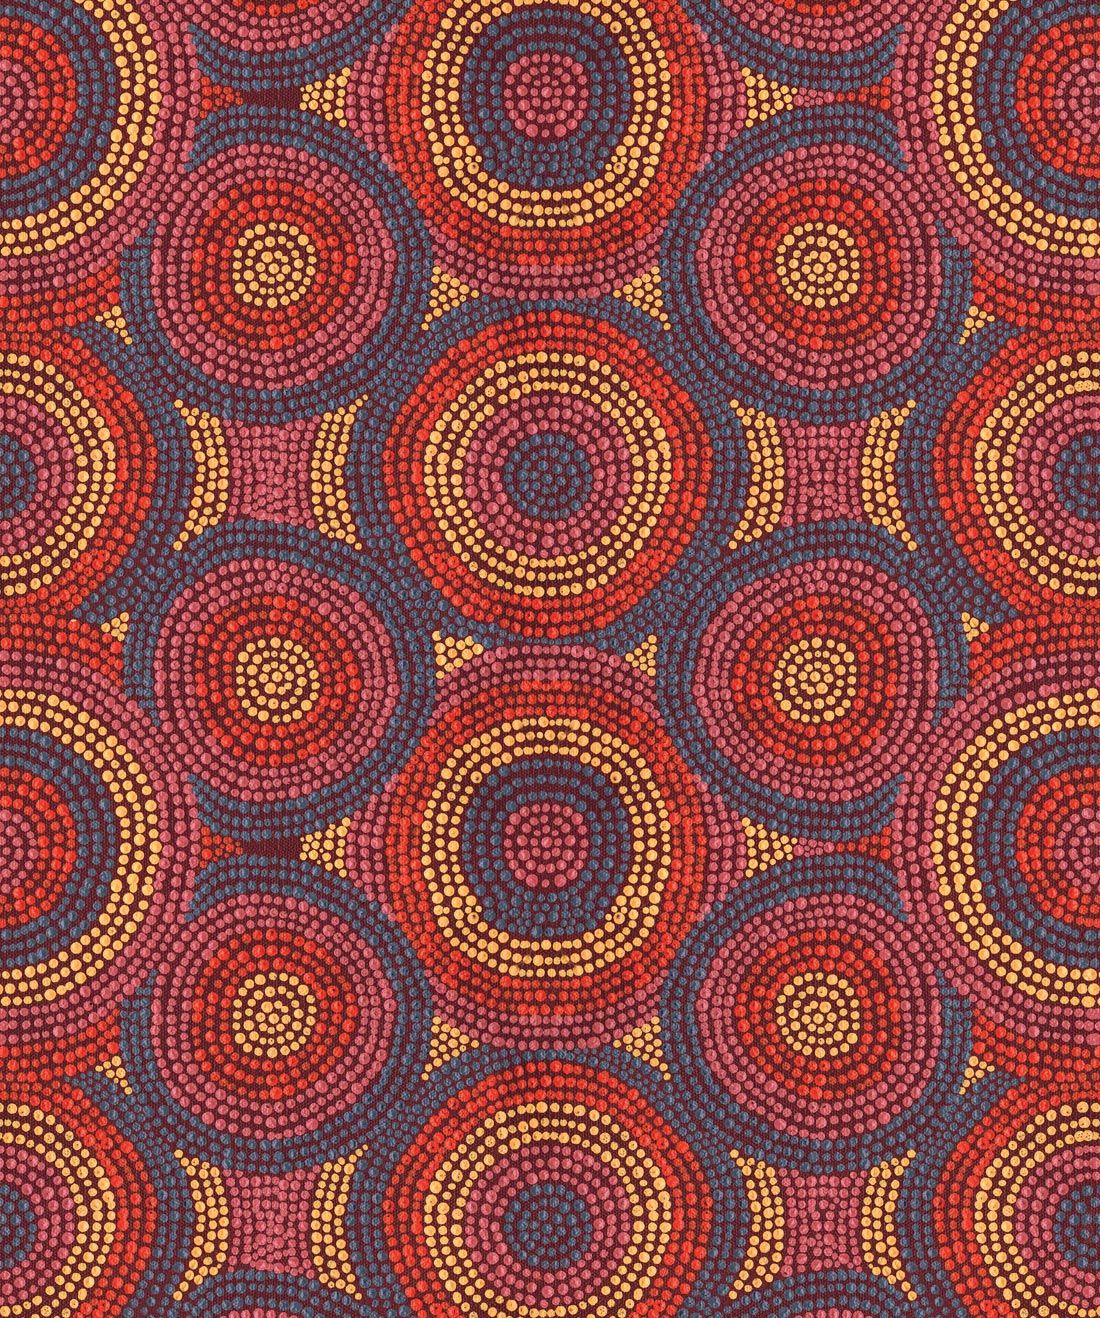 TjUSAula • Authentic Indigenous Dot Painting Wallpaper